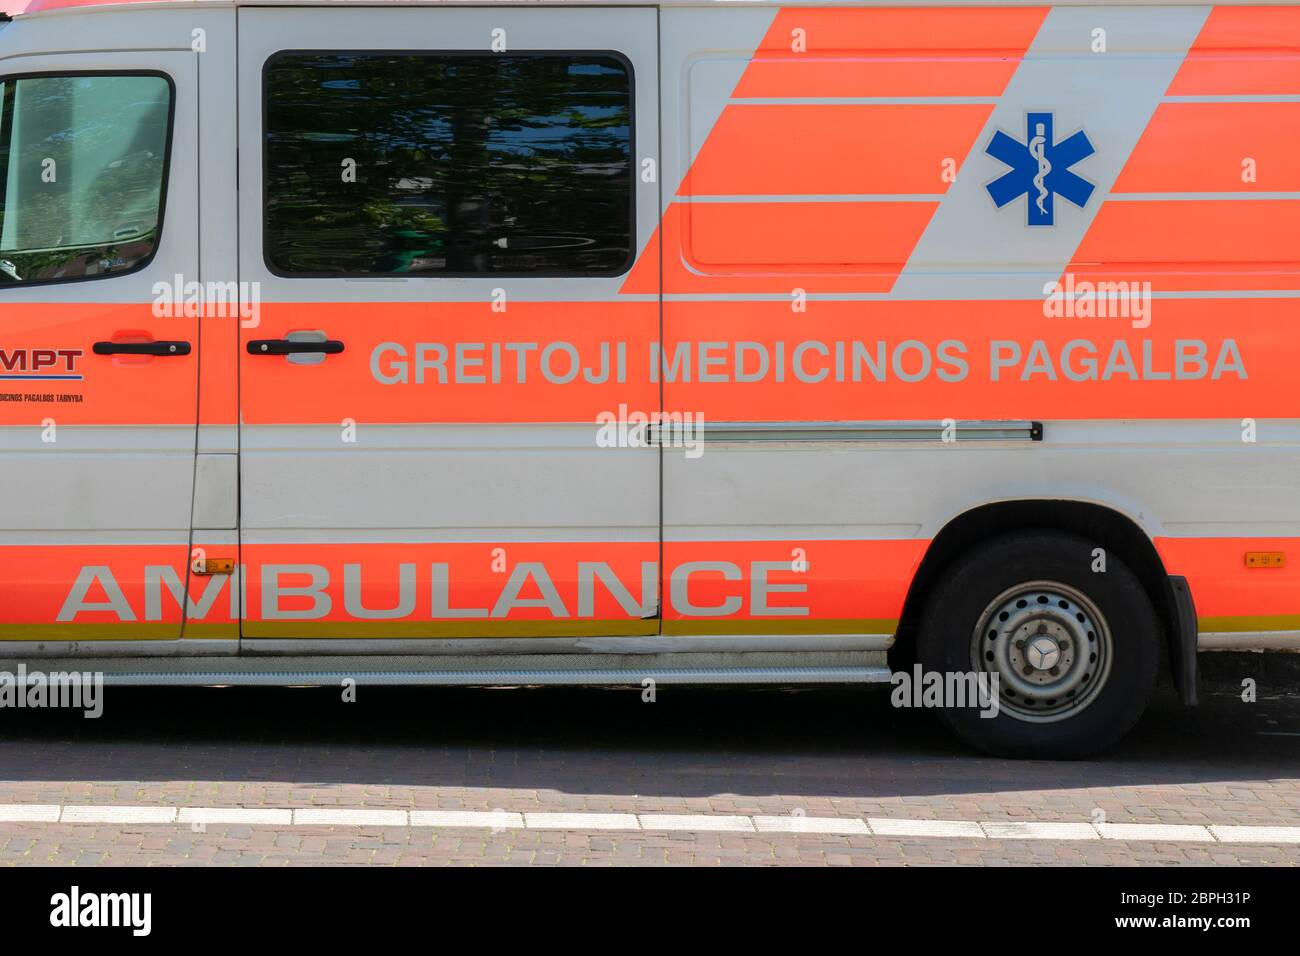 Italian Ambulance During The Corona Virus Outbreak At Amsterdam The Netherlands 2020 Stock Photo